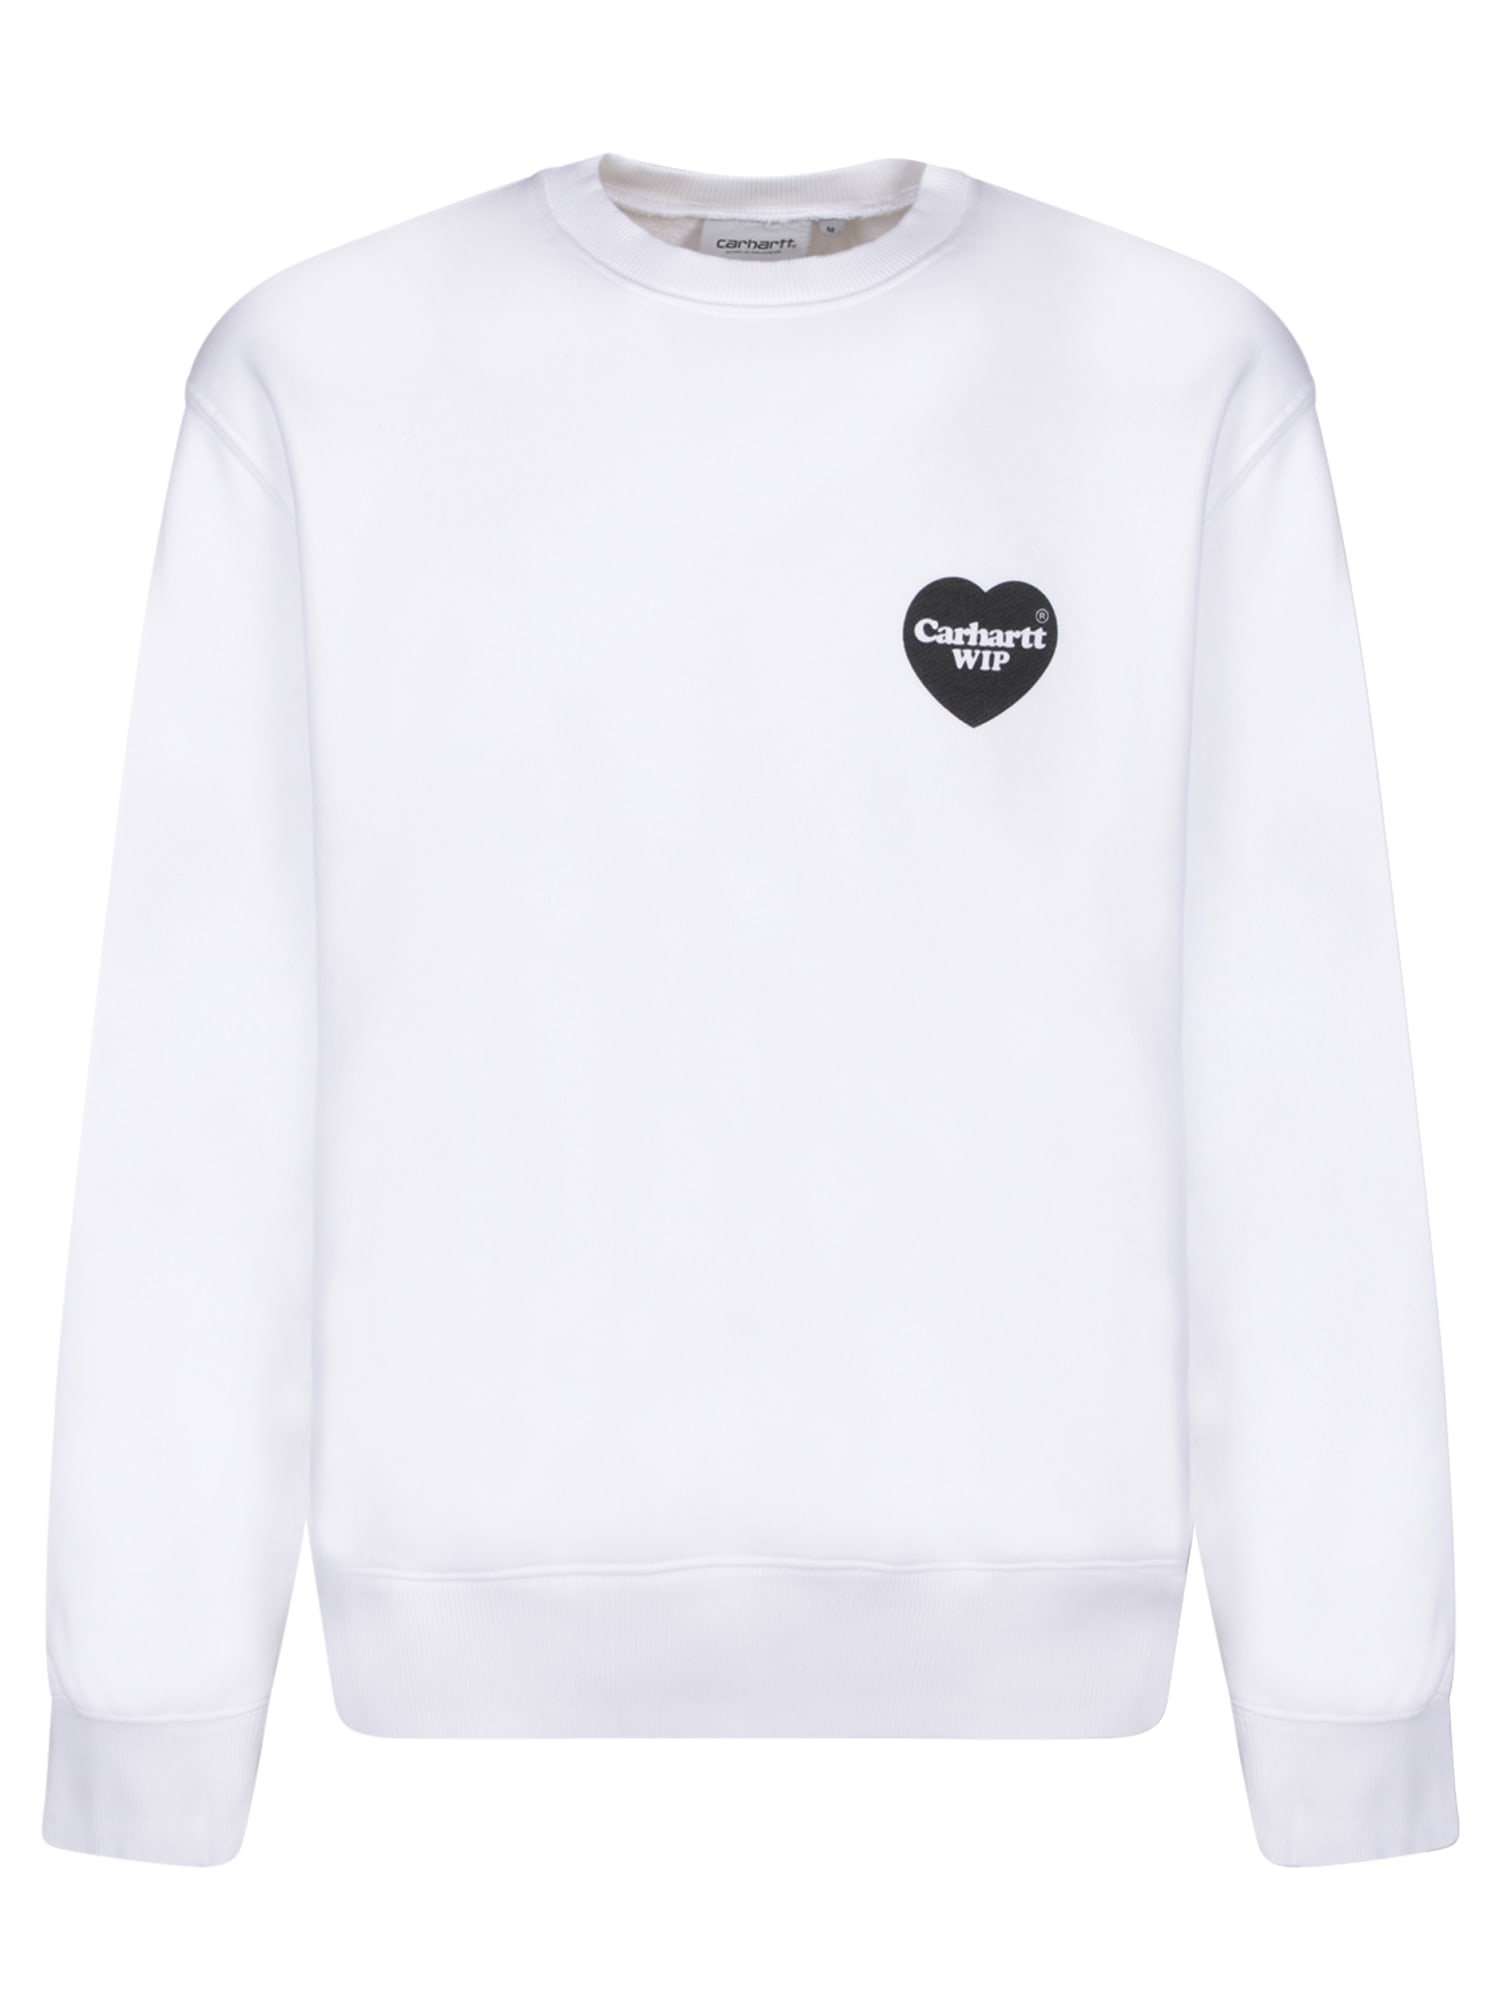 Heart Bandana White Sweatshirt